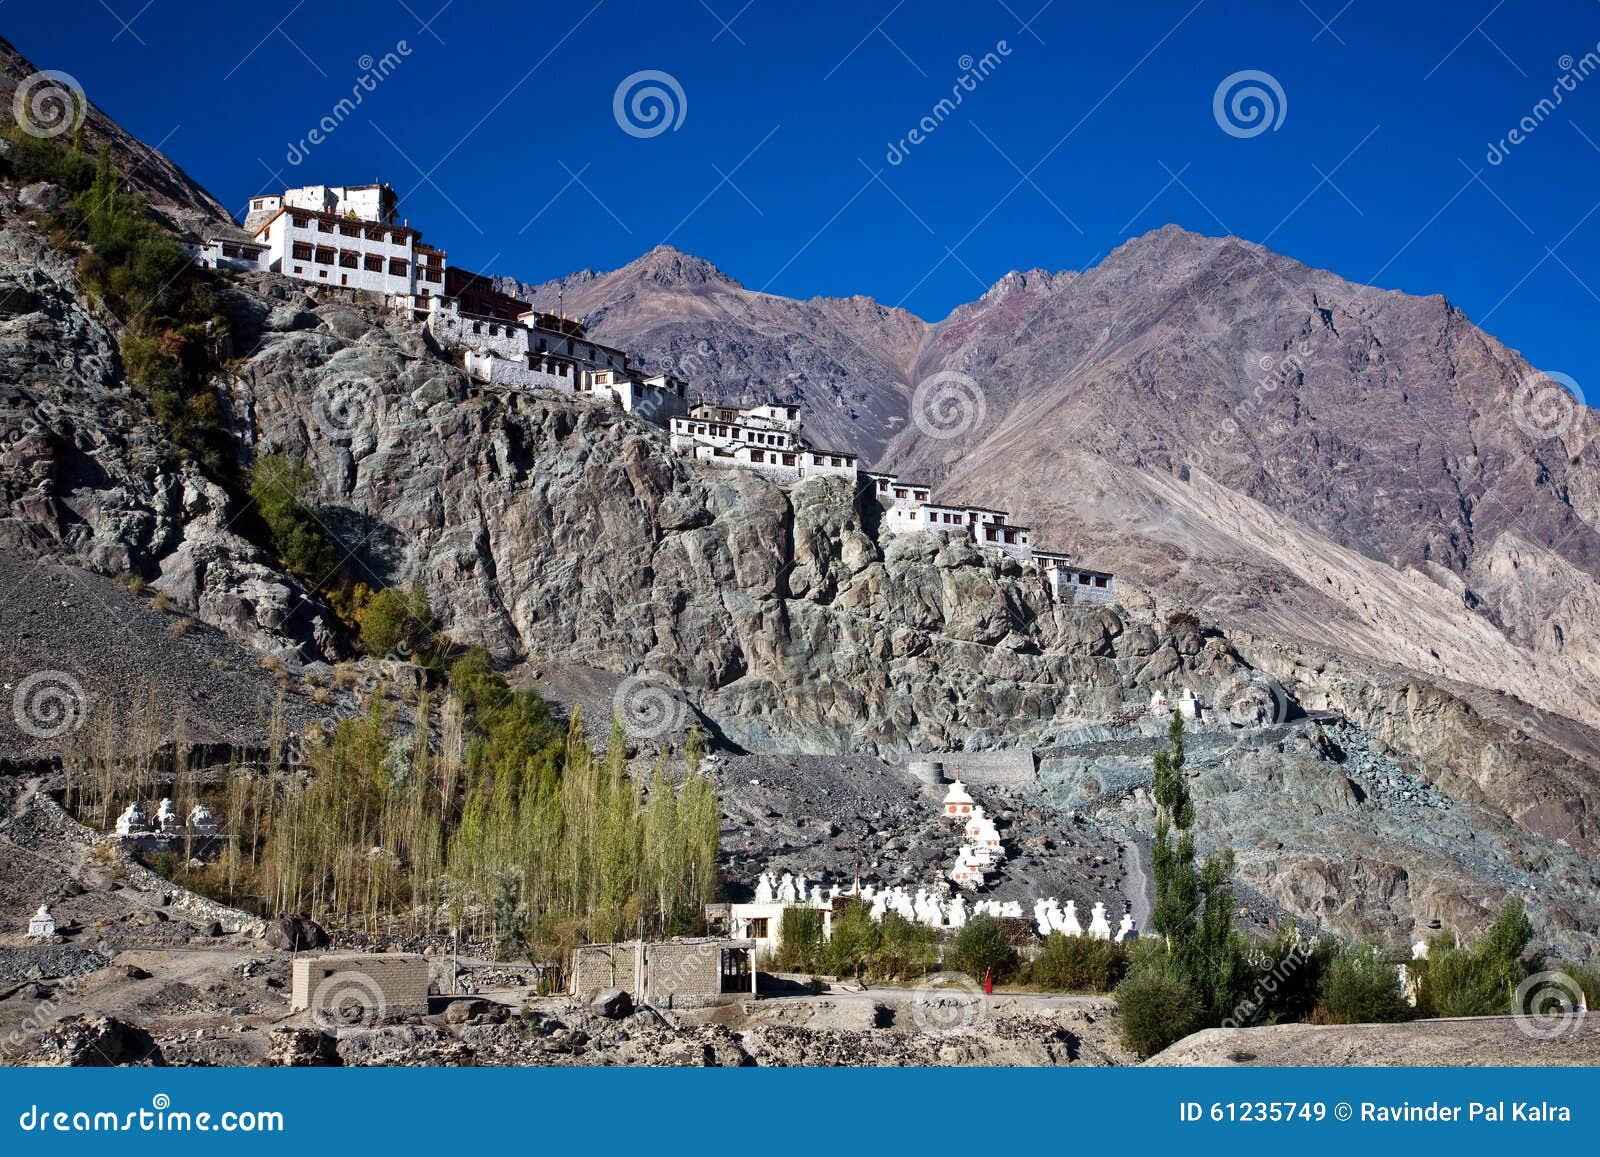 diskit monastery, nubra valley,leh-ladakh, jammu and kashmir, india